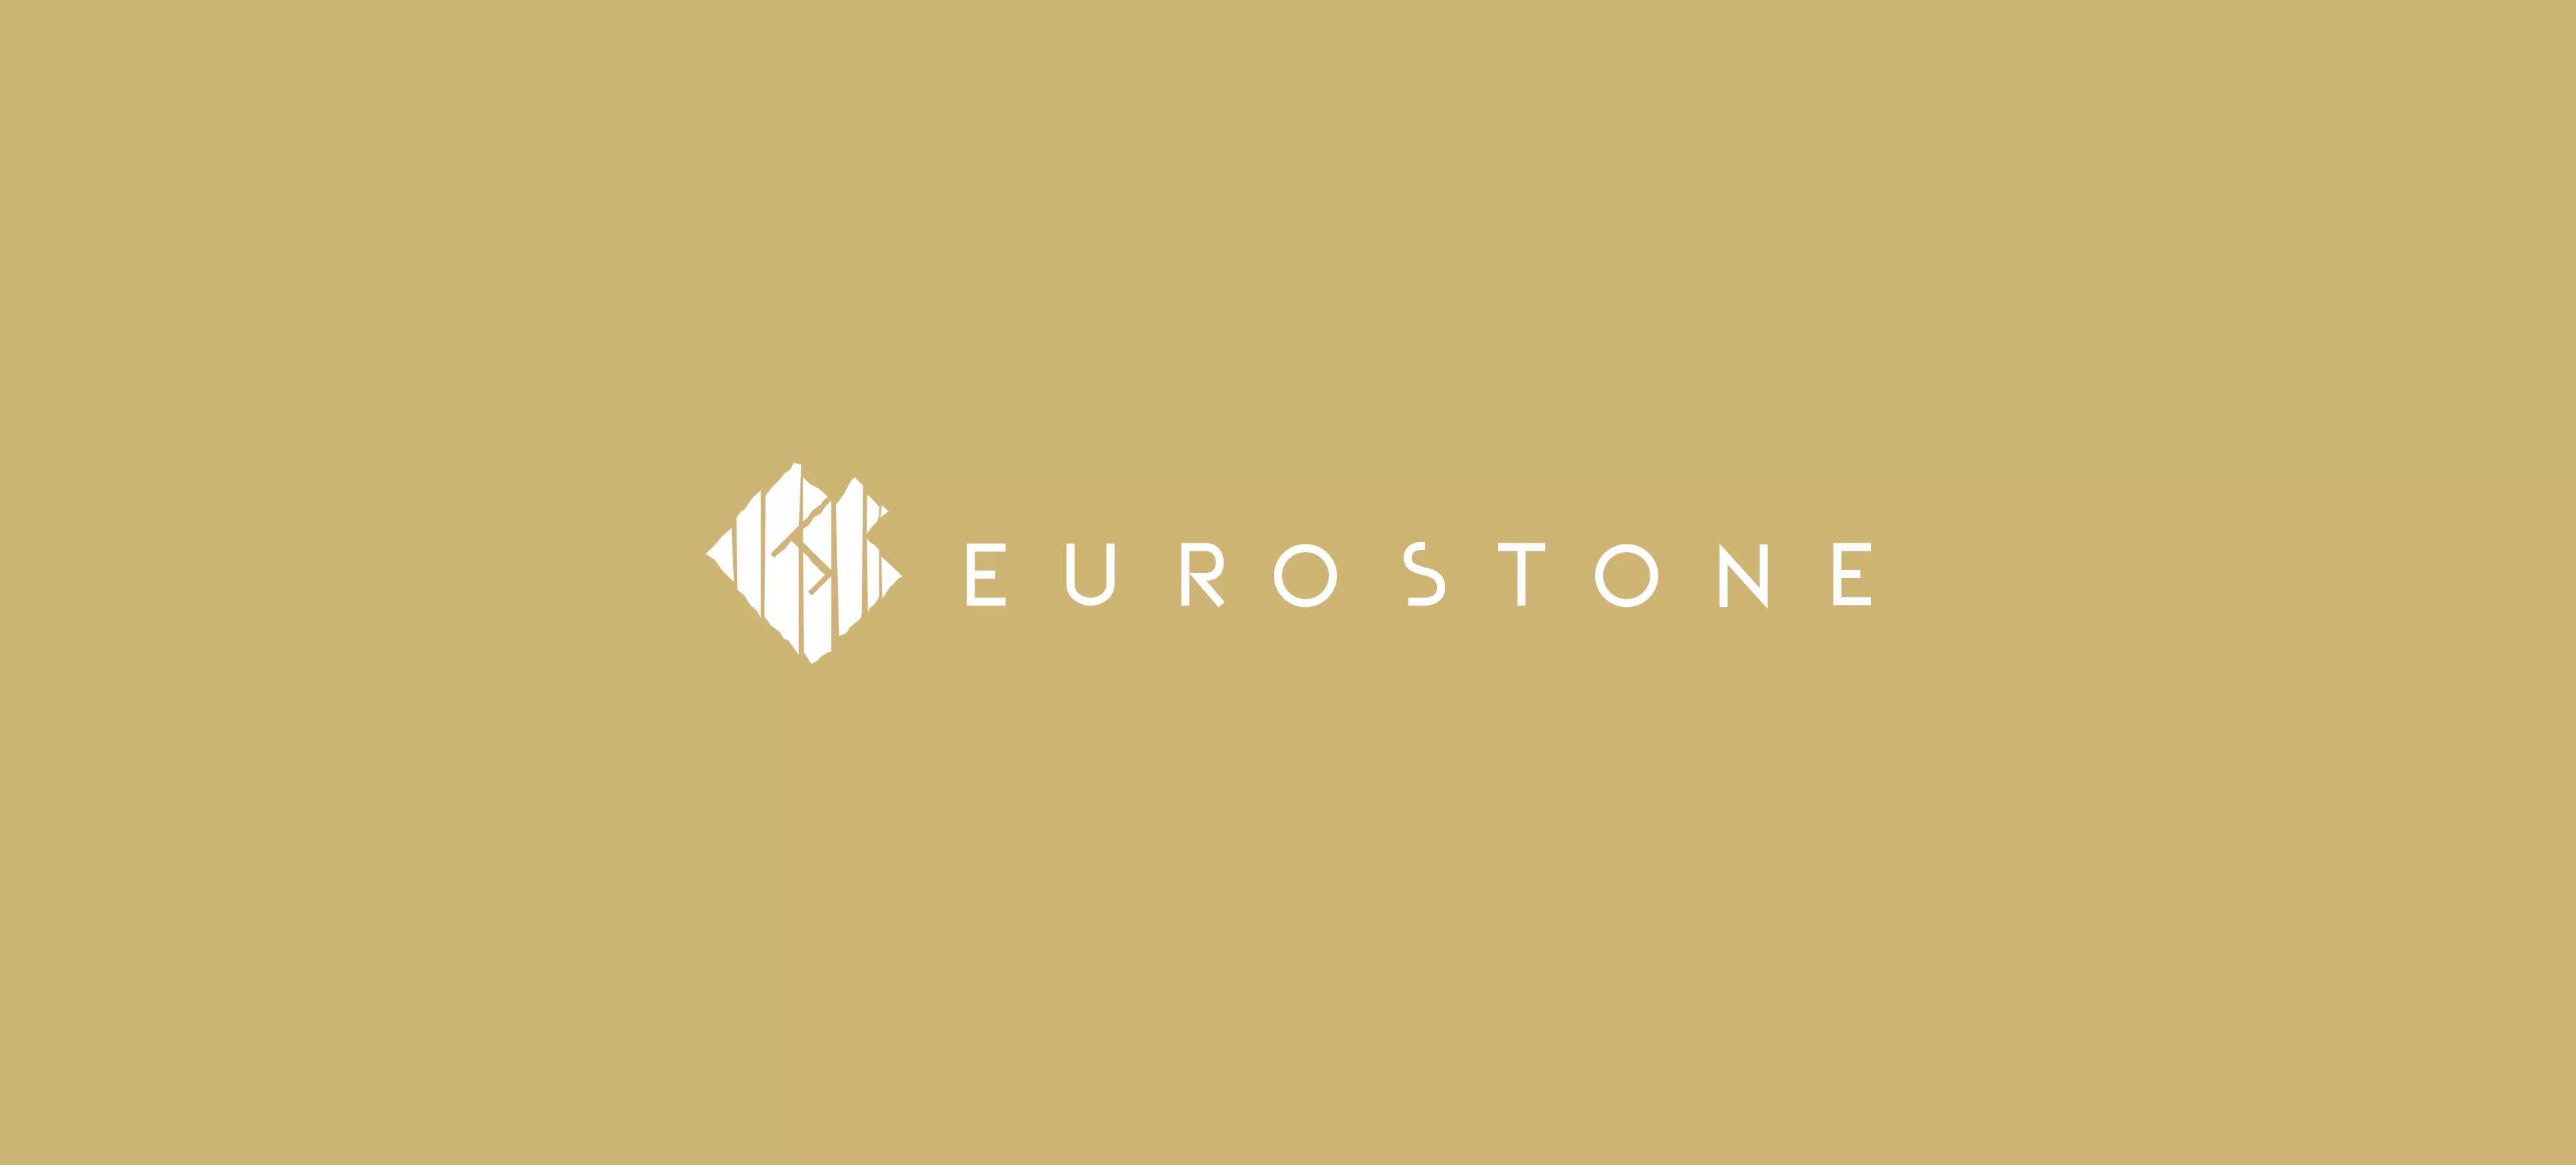 Logo Eurostone wersja pozioma Realizacja Sto15 Studio Projektant Piotr Ratuski